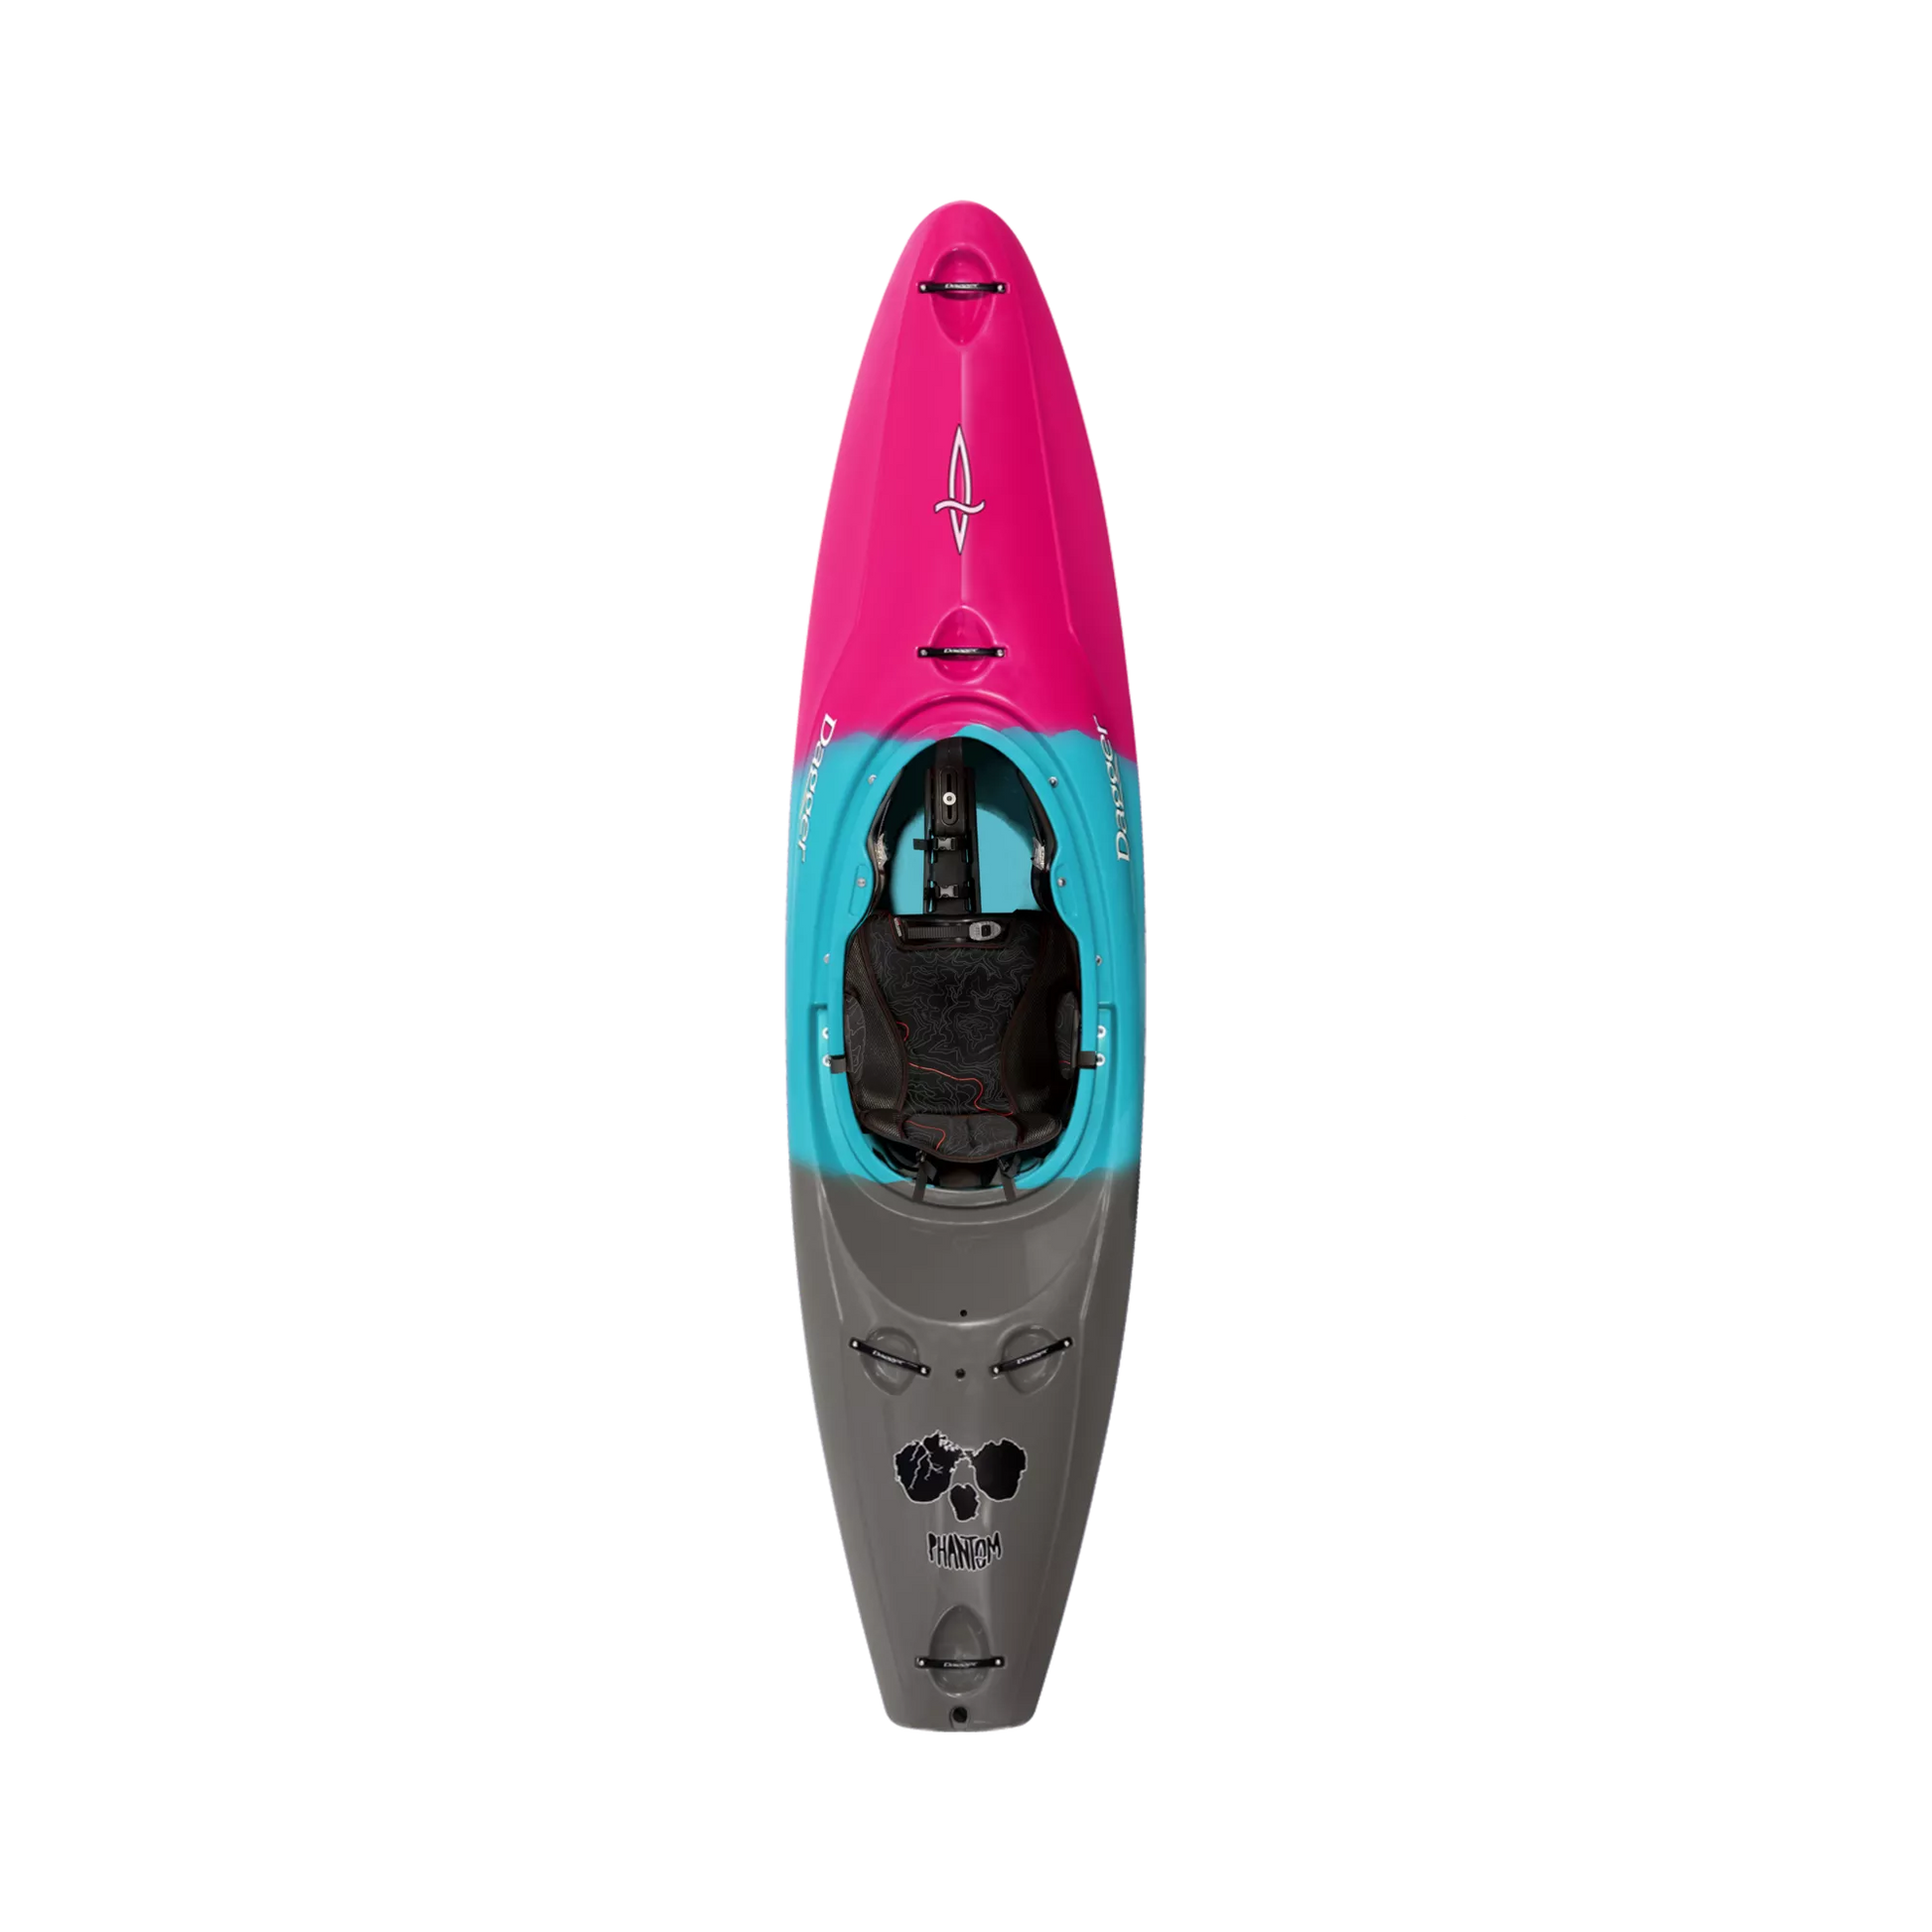 A Dagger Phantom kayak with a pink, blue and grey design.